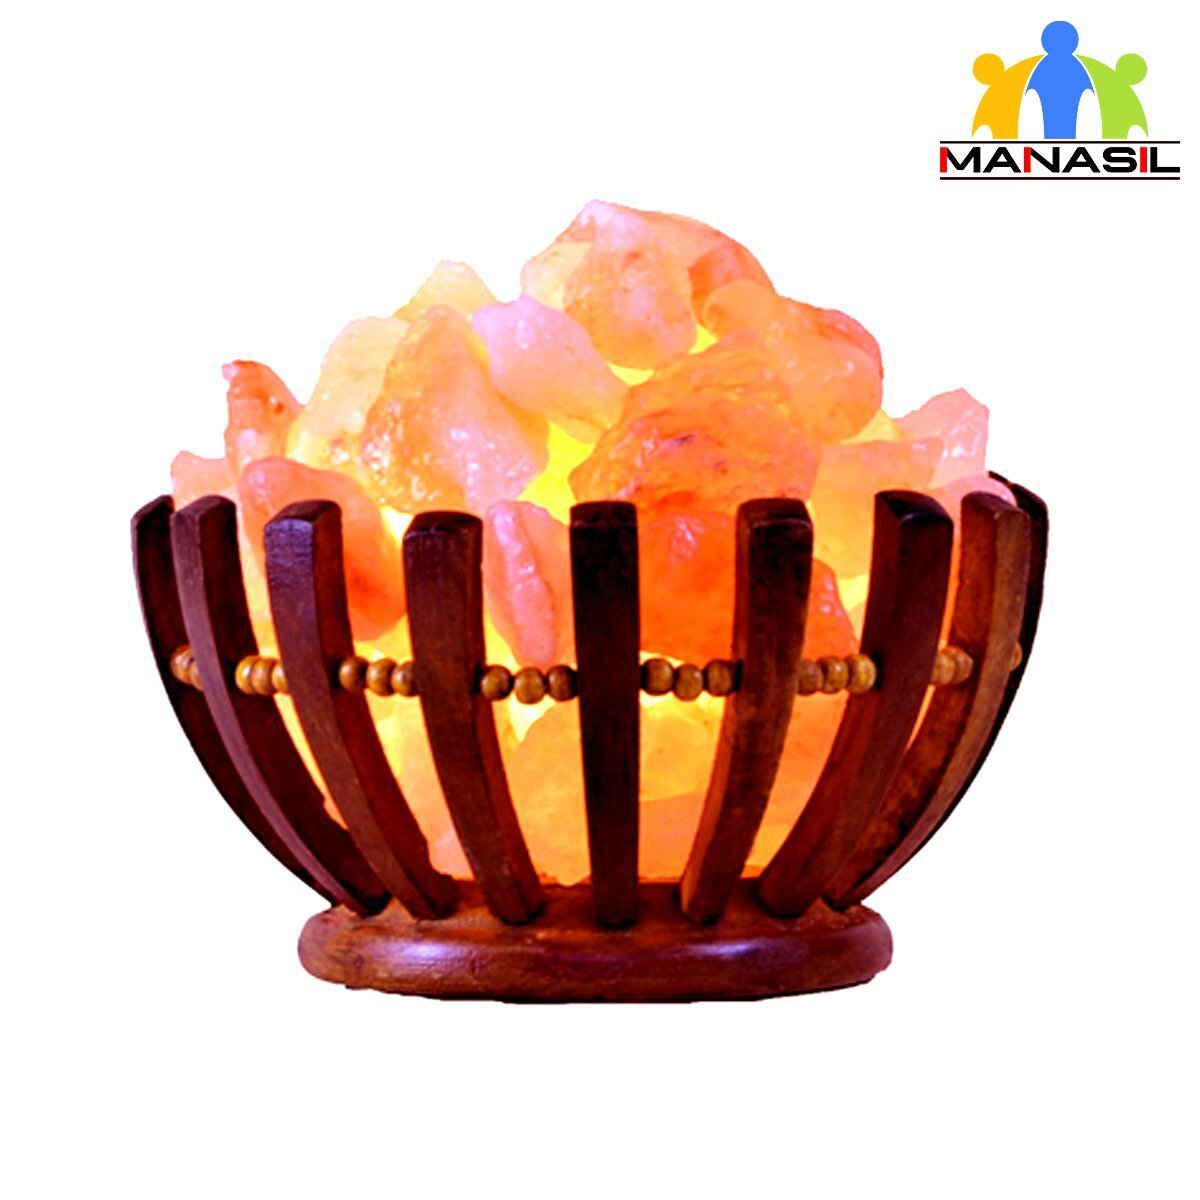 Wb-01. 8 In. Himalayan Salt Natural Chunks Basket Lamp - Round Shape - 6-8 Lbs